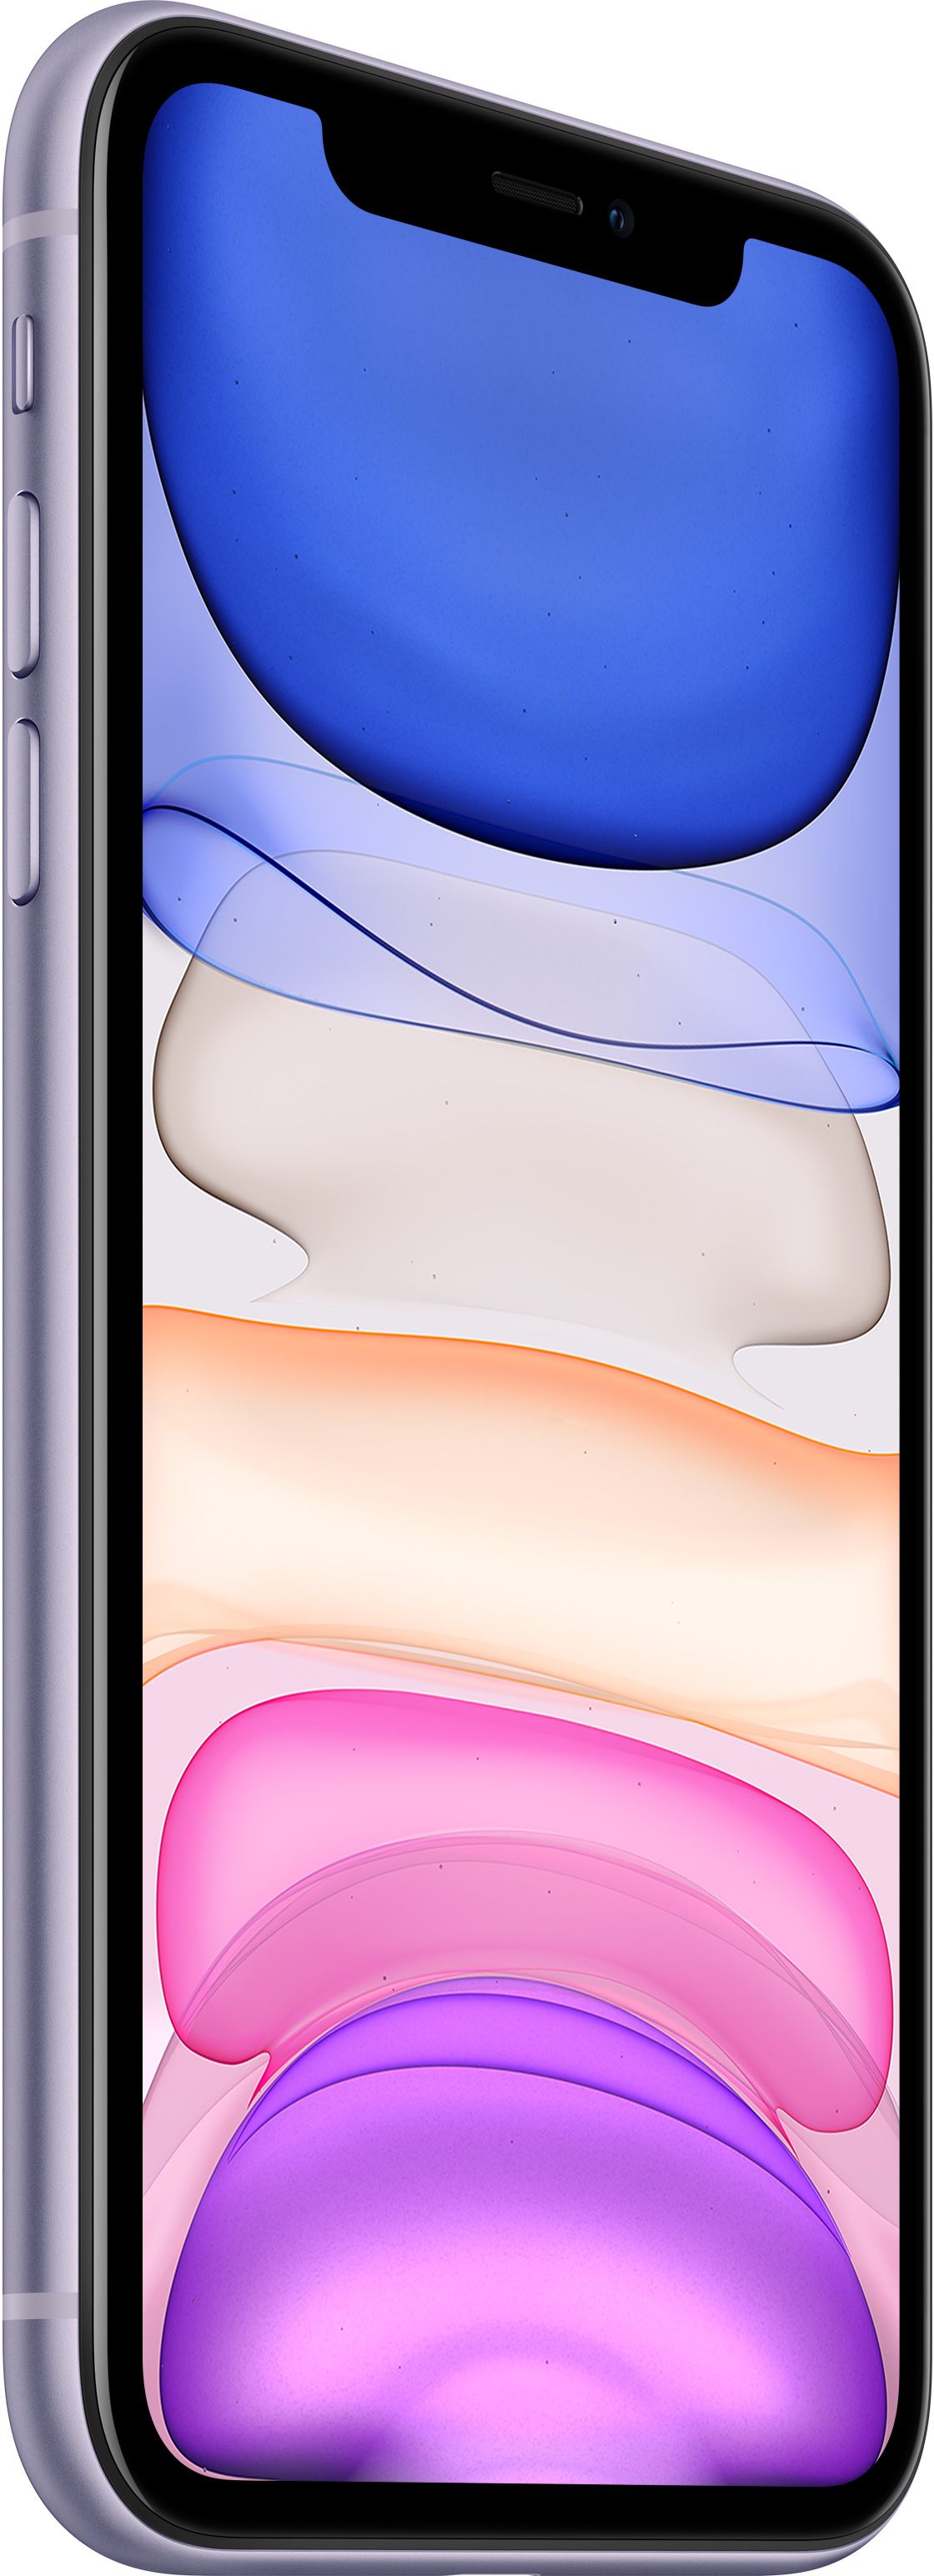 Apple iPhone 11 128GB purple